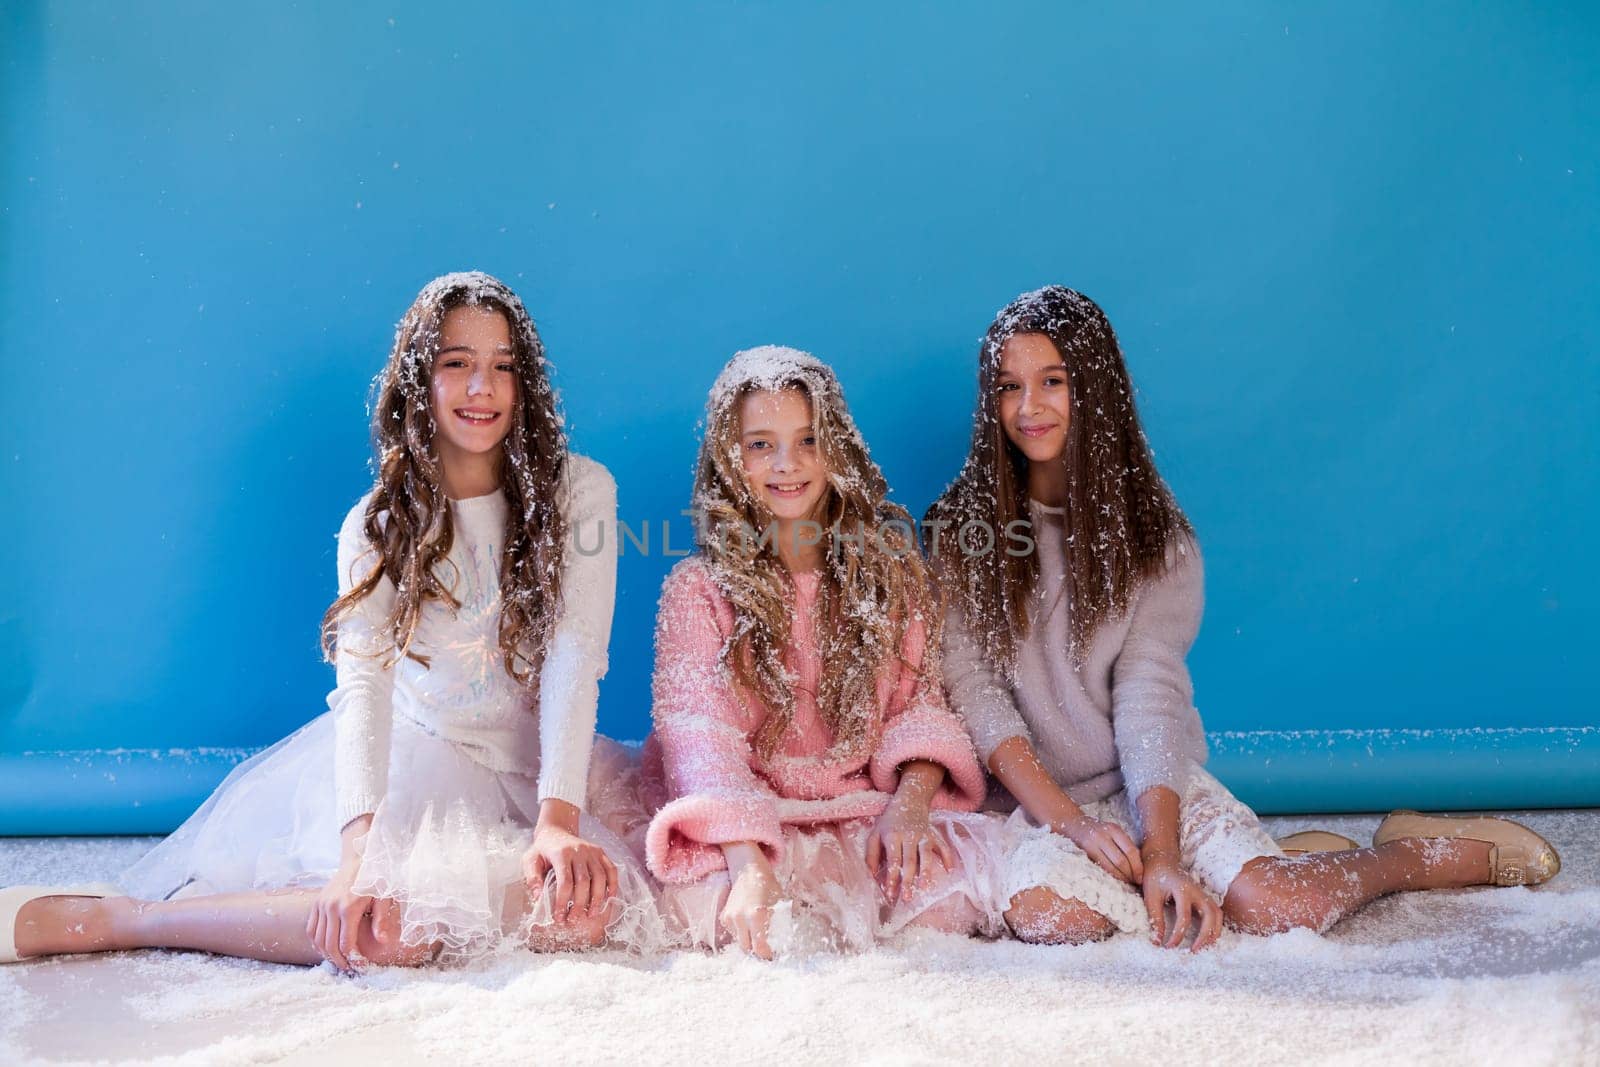 three girls girlfriends play pine snom in winter